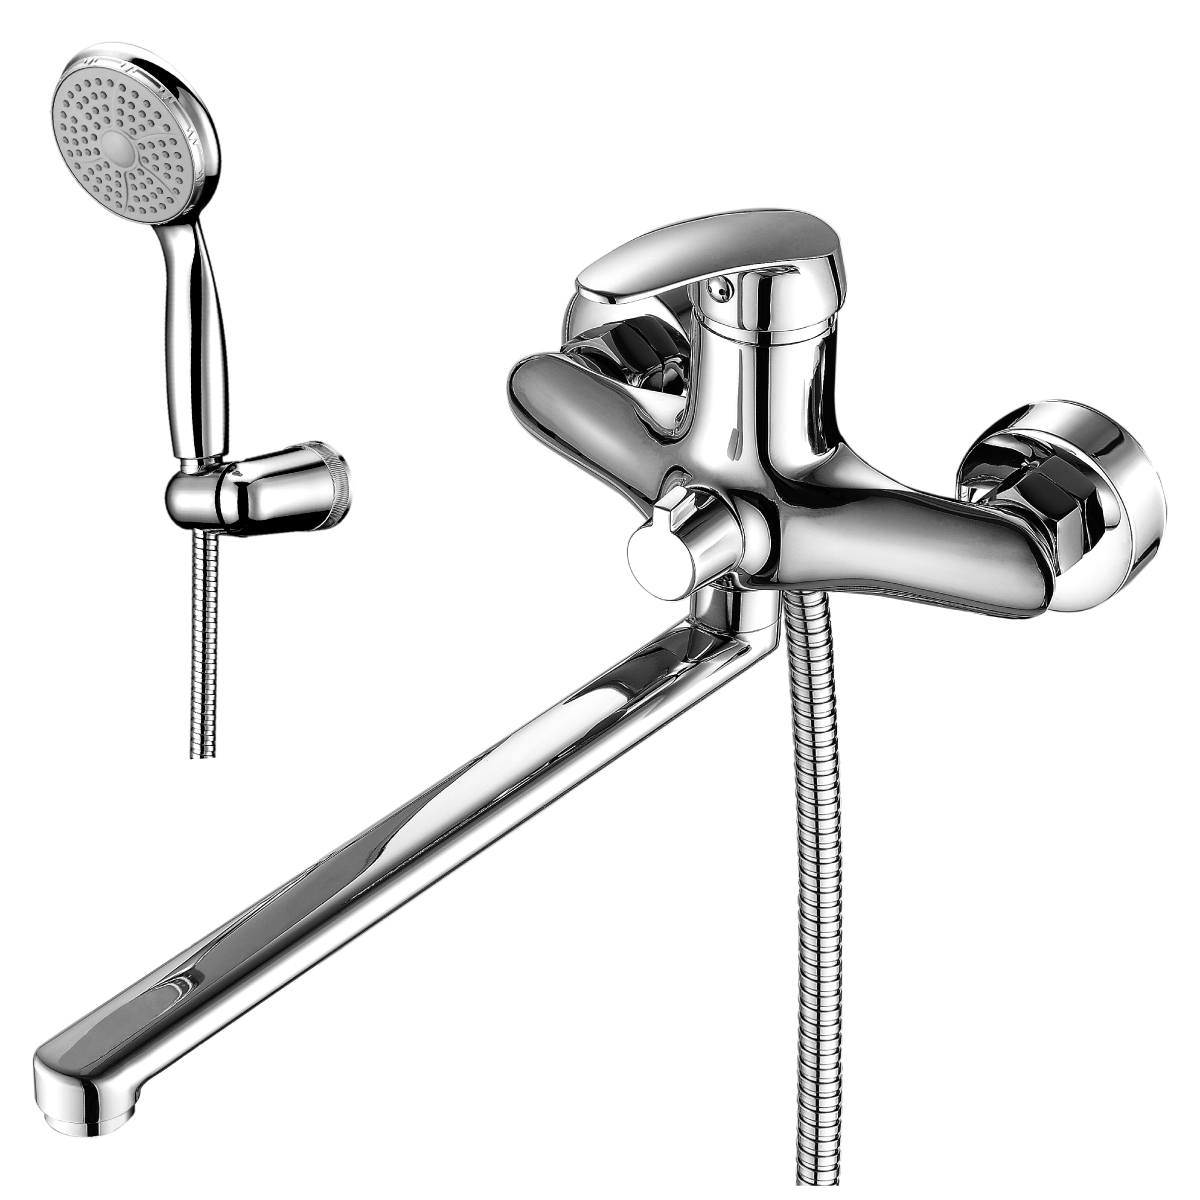 LM0451C Washbasin/bath faucet
with 300 mm flat swivel spout